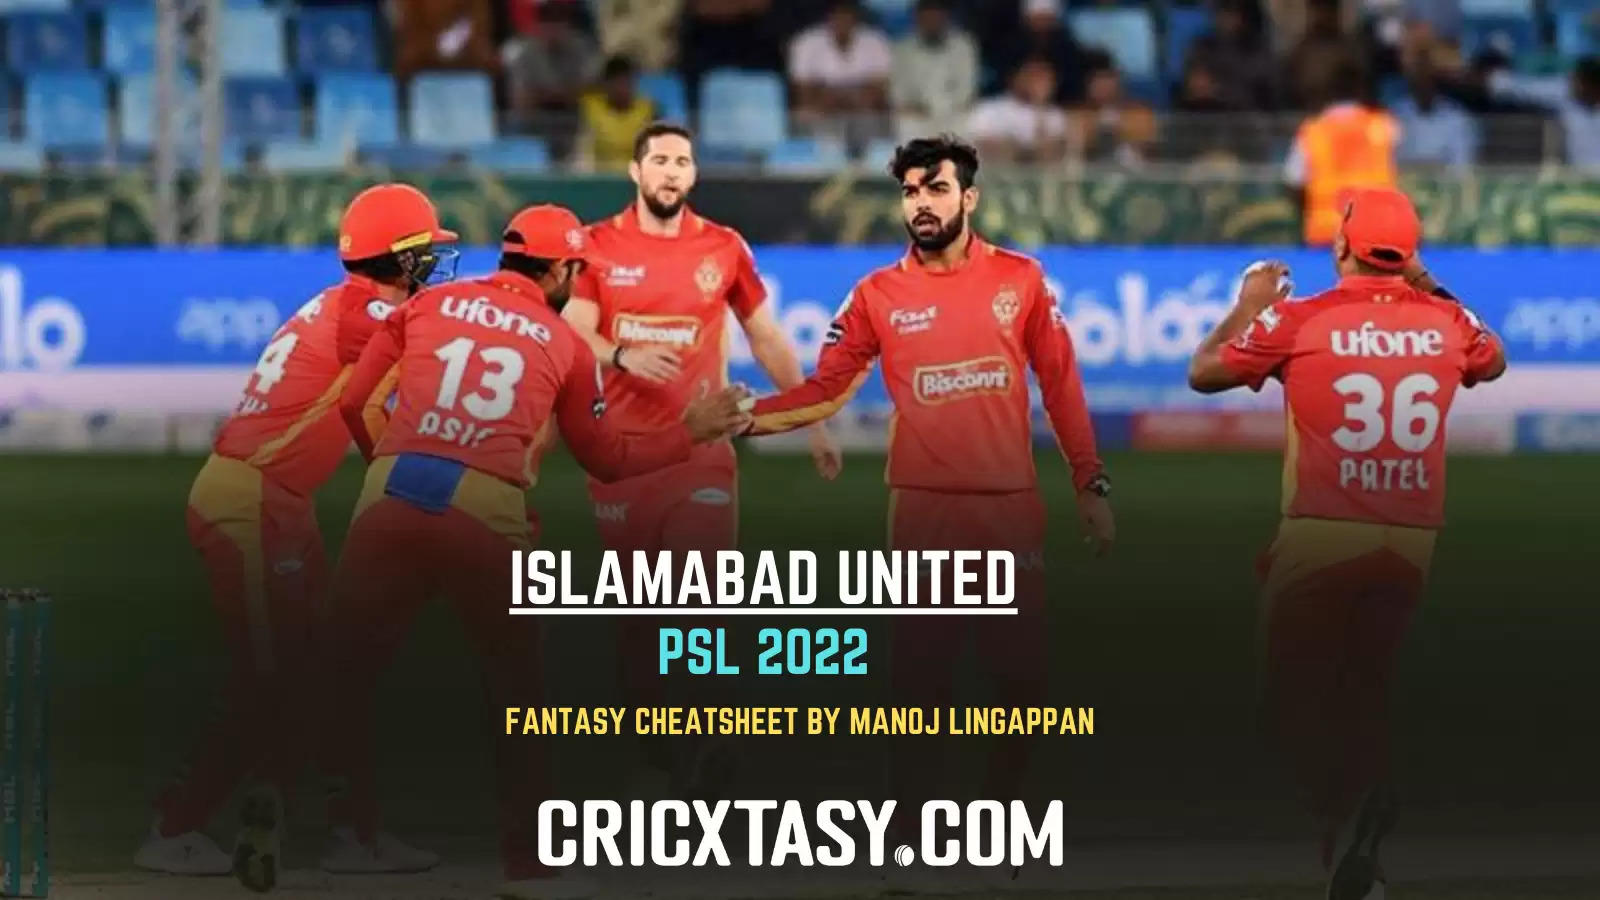 Pakistan Super League: Islamabad United Fantasy CheatSheet For PSL 2022